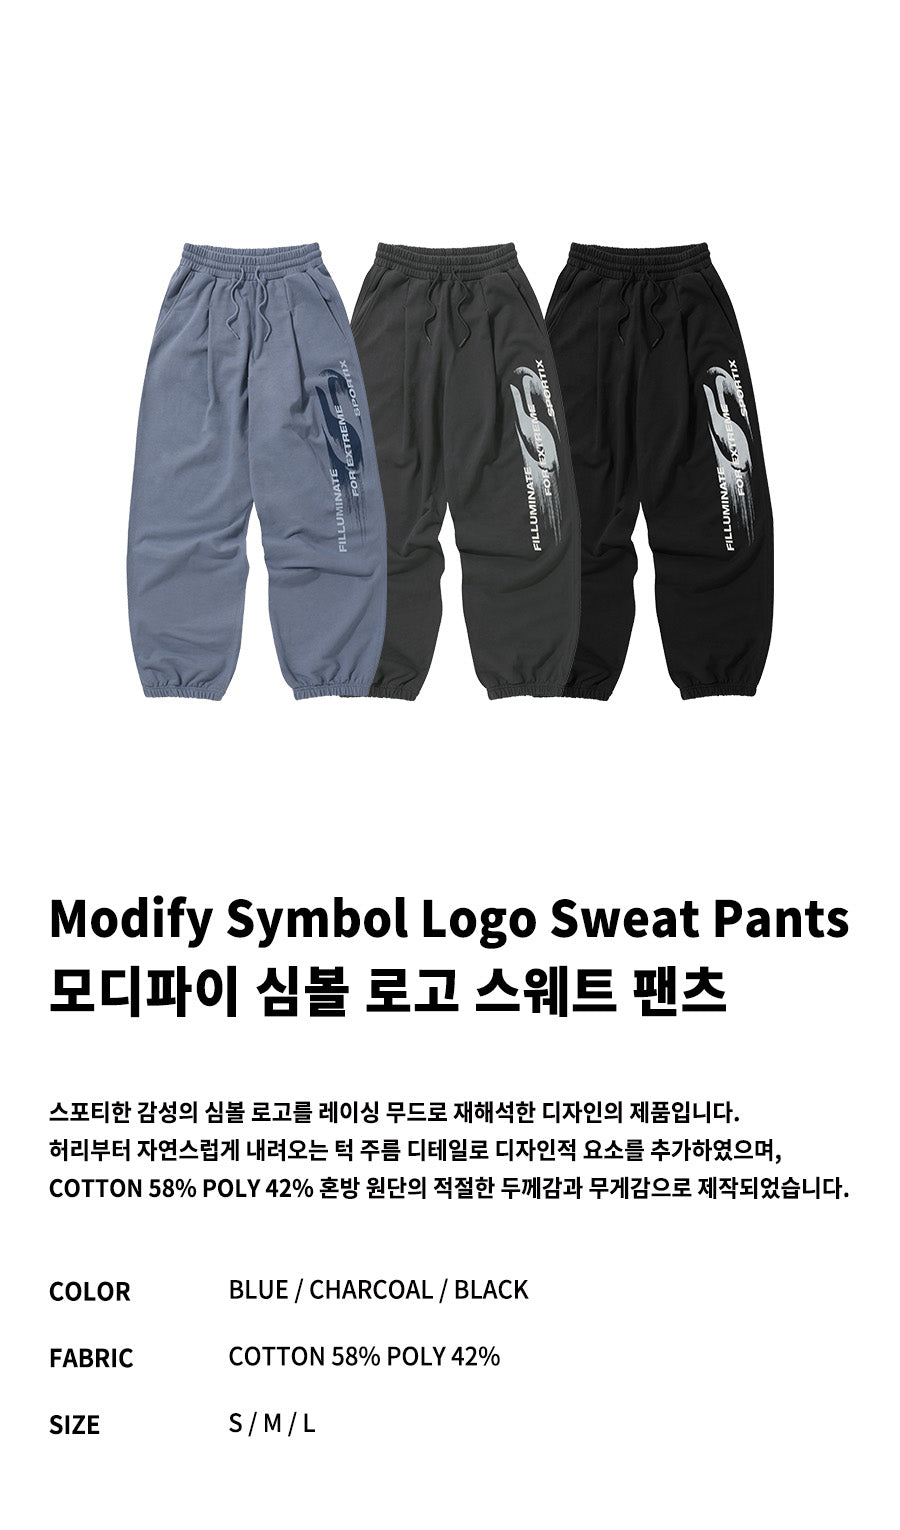 Modify Symbol Logo Sweat Pants-Charcoal